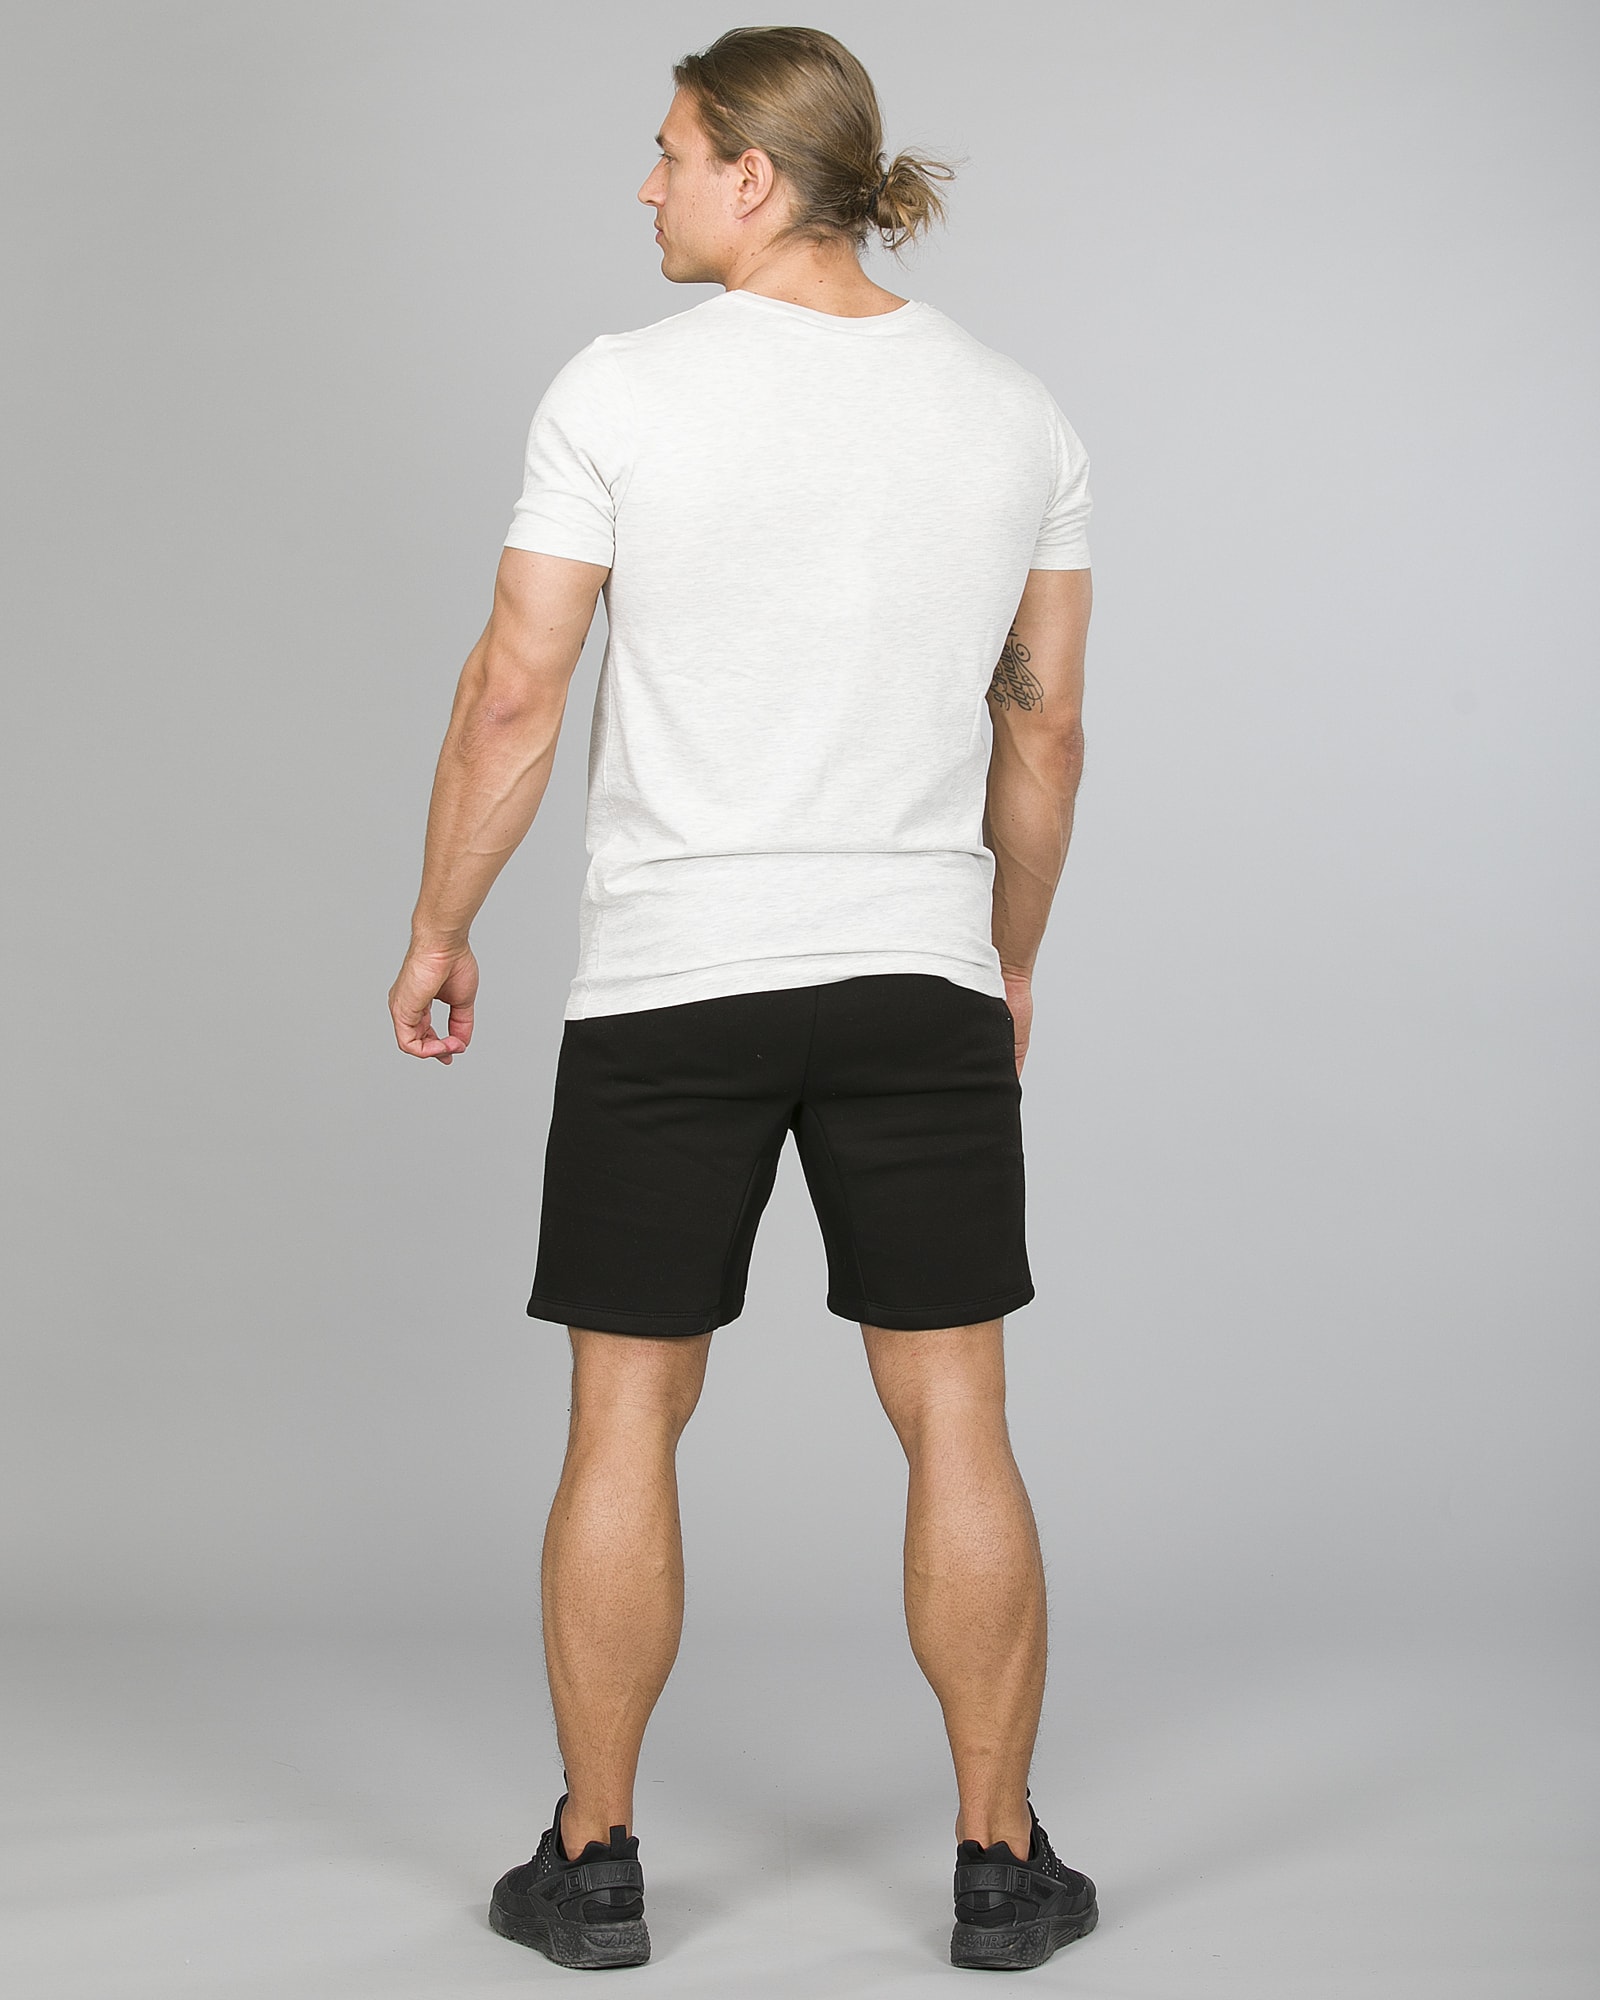 Hype Script T-Shirt Men ss18005 Charcoal and Crest Shorts ss18336b Black c